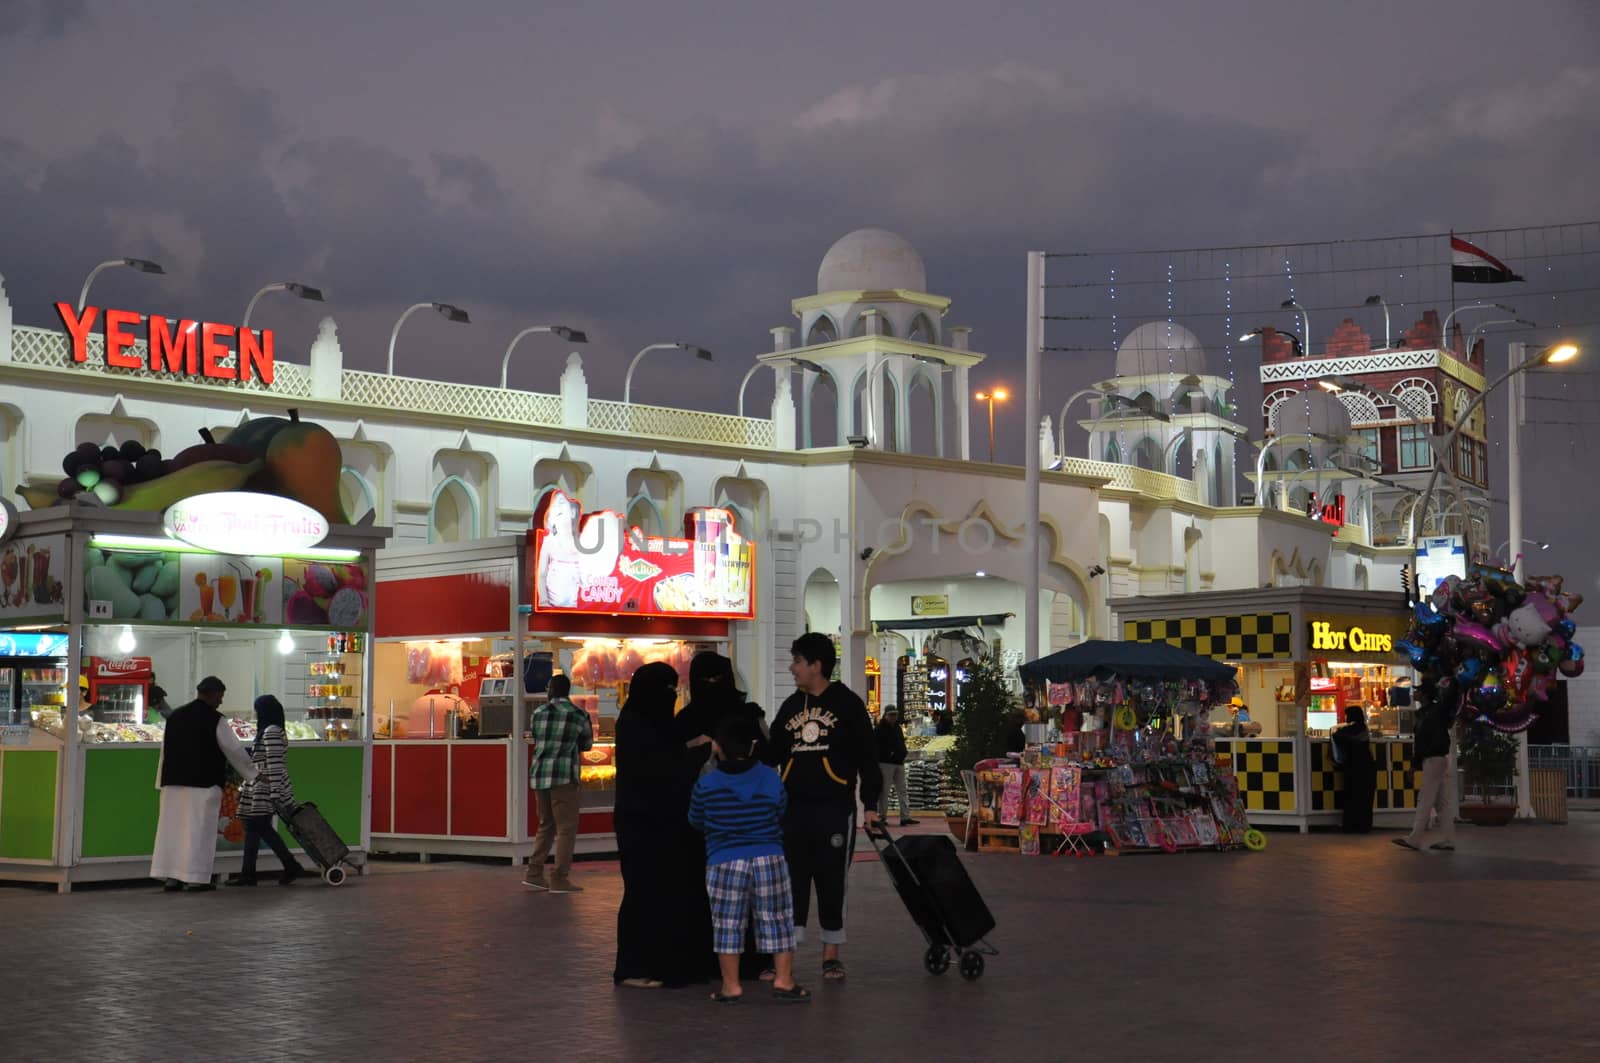 Yemen pavilion at Global Village in Dubai, UAE by sainaniritu